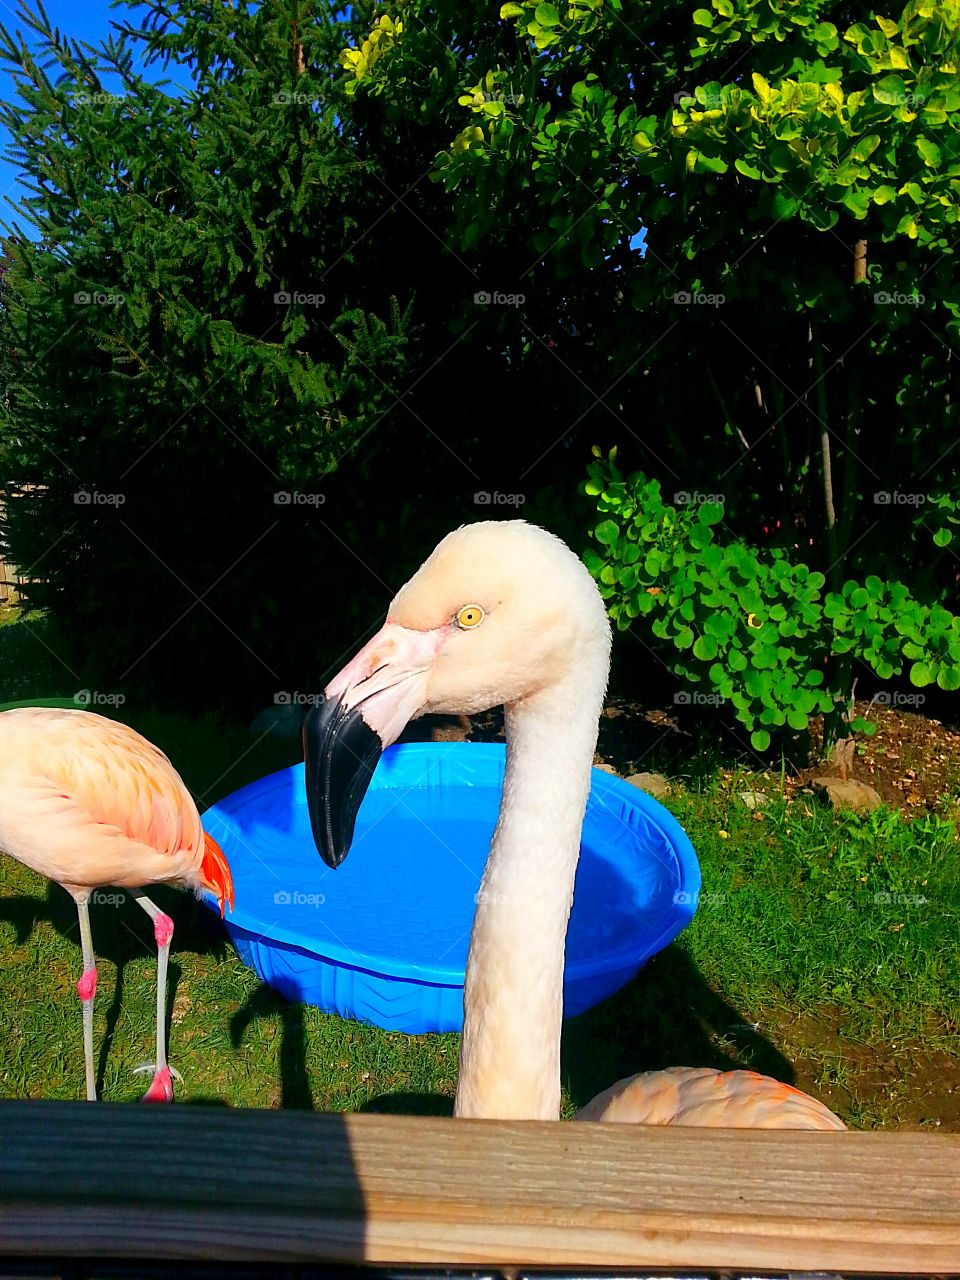 A flamingo at the zoo.